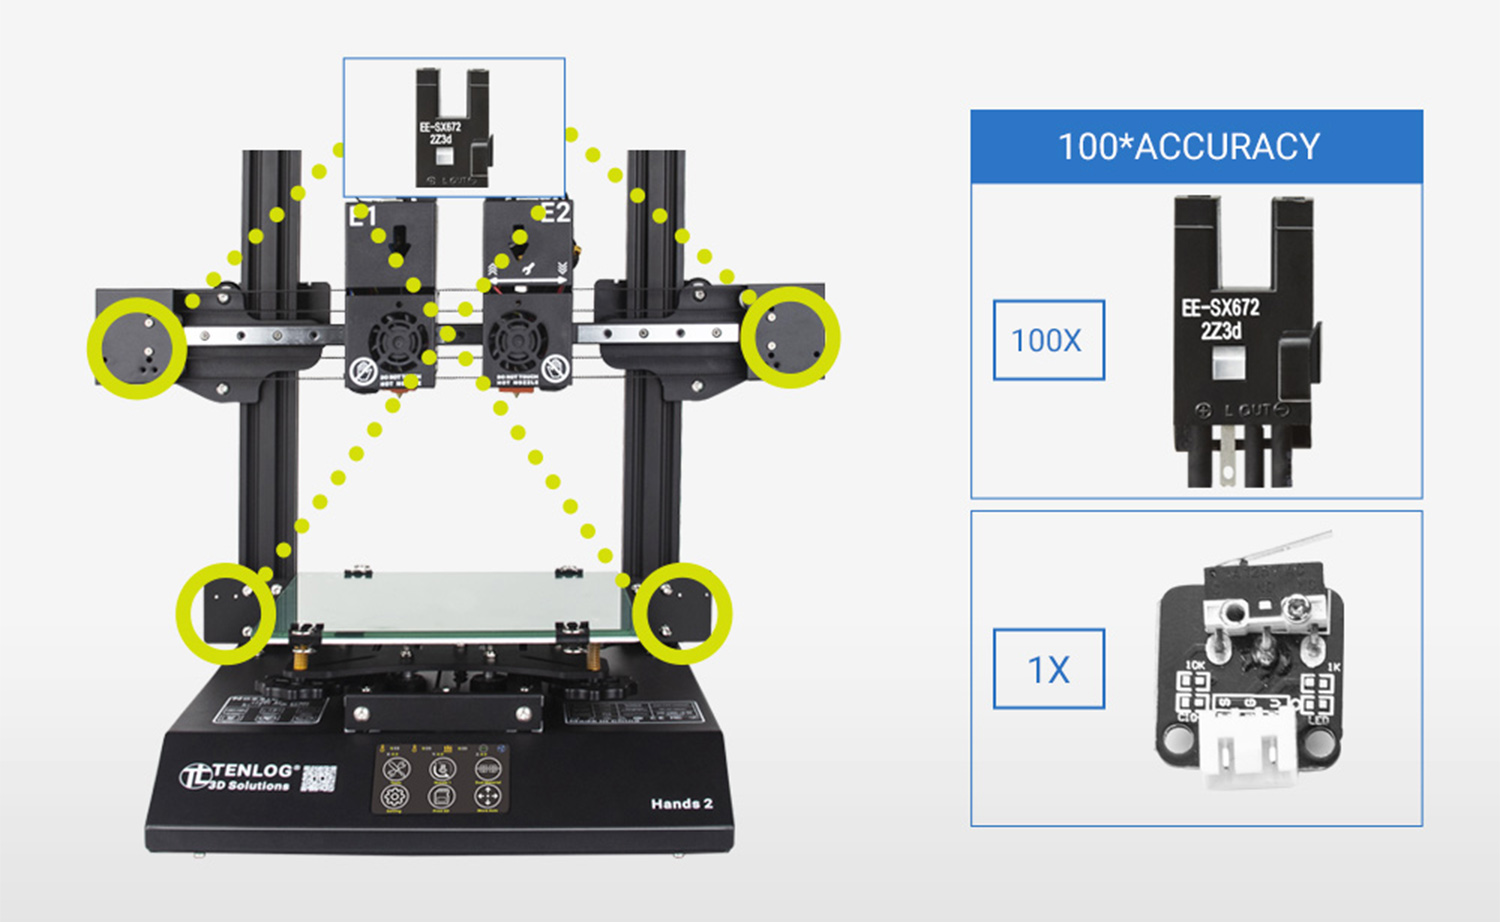 TENLOG Hands 2 DMP Impresora 3D Sensor fotoeléctrico